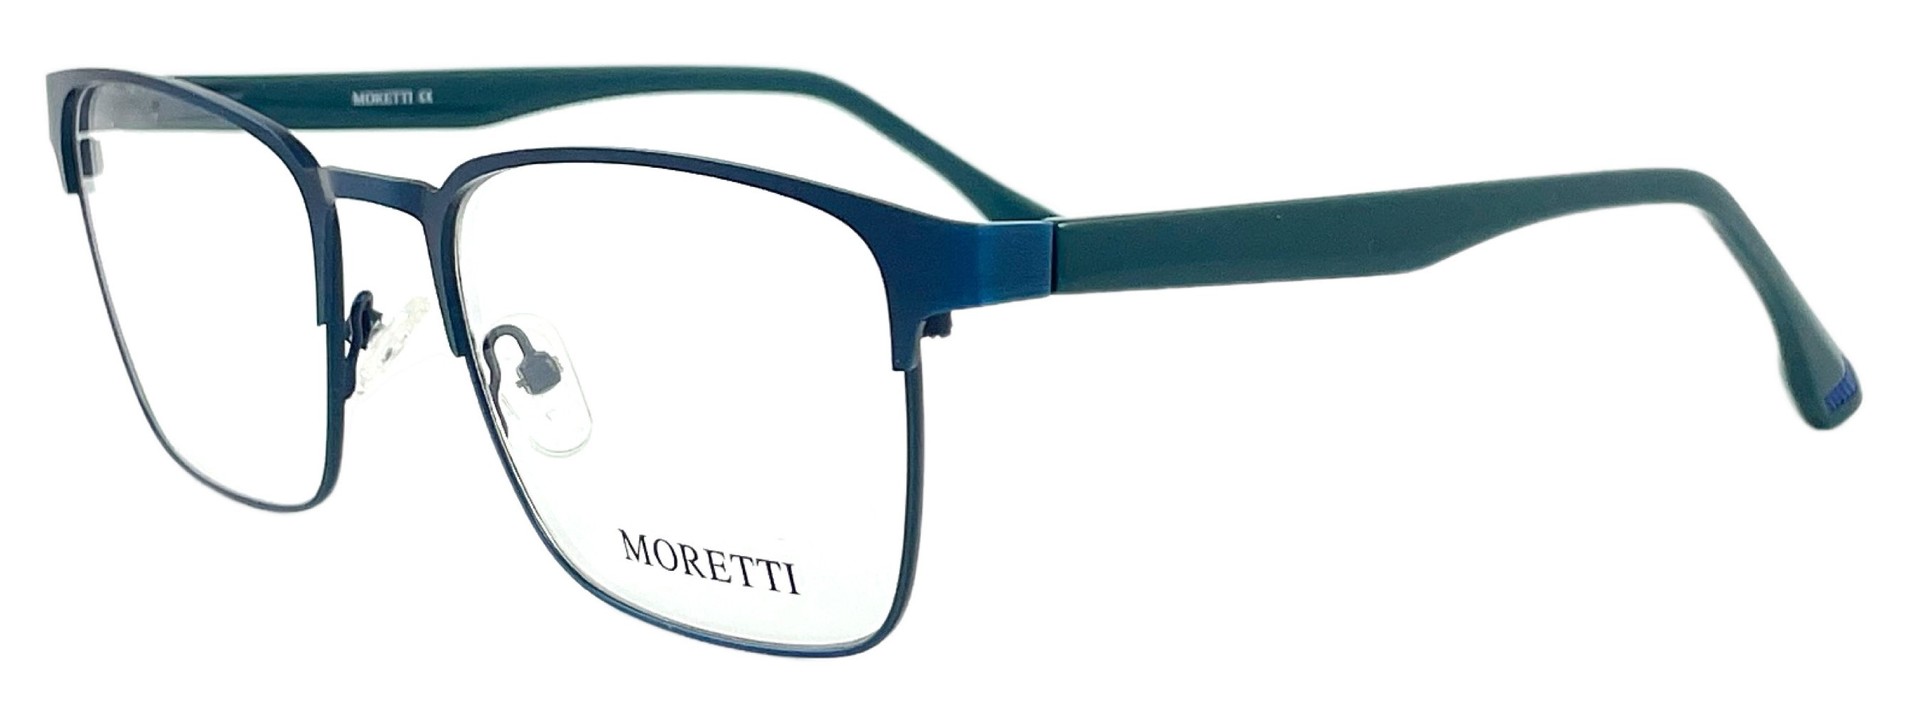 Moretti XTK61006 C3 2